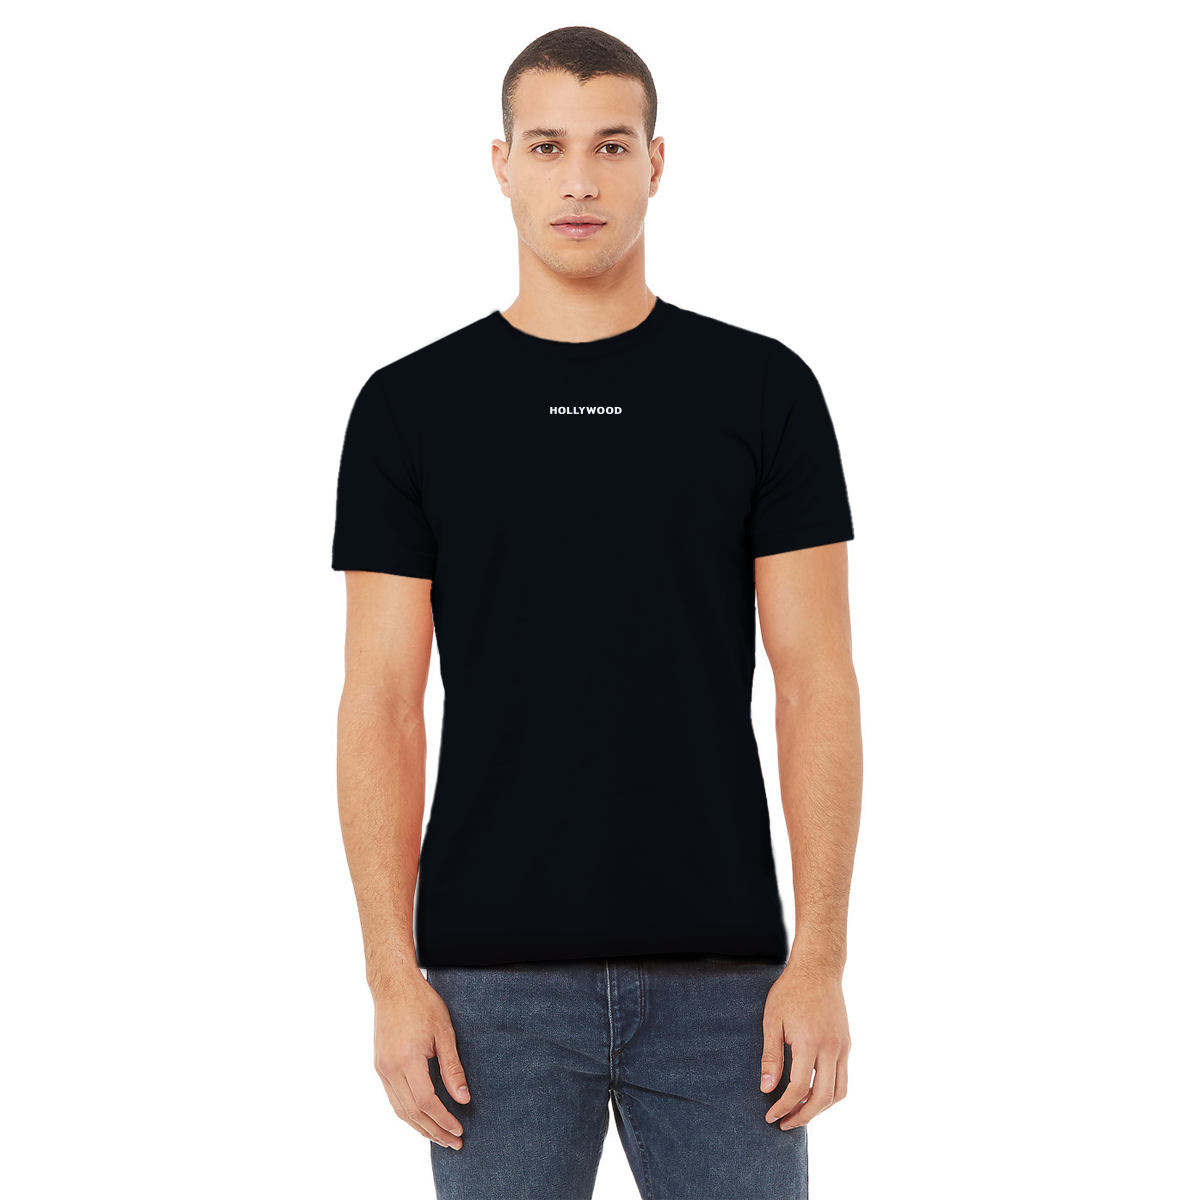 Hollywood Men's T-shirt | Black